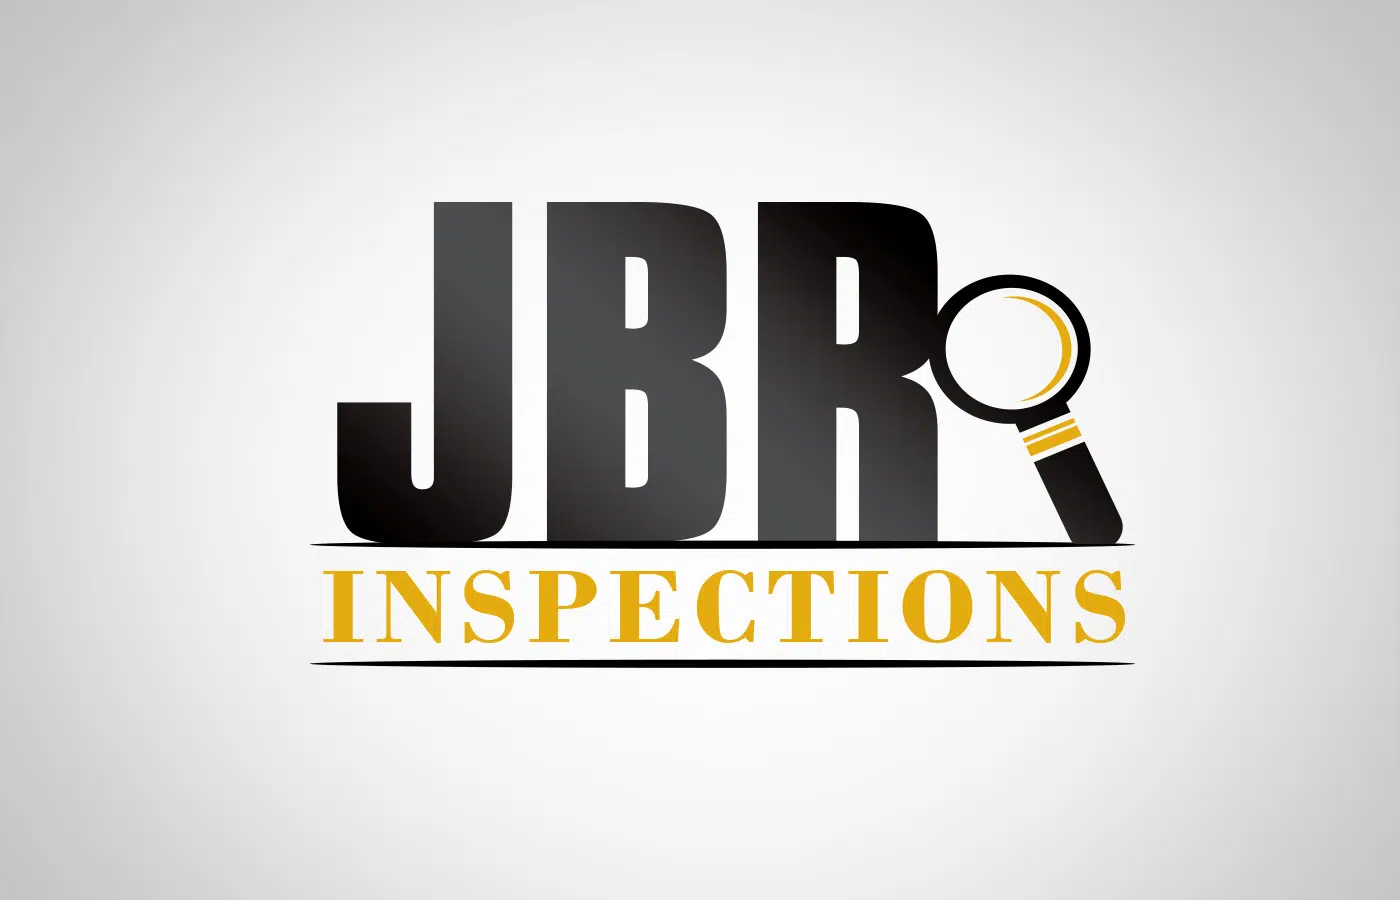 Edmonton Graphic Design | JBR Inspections Logo